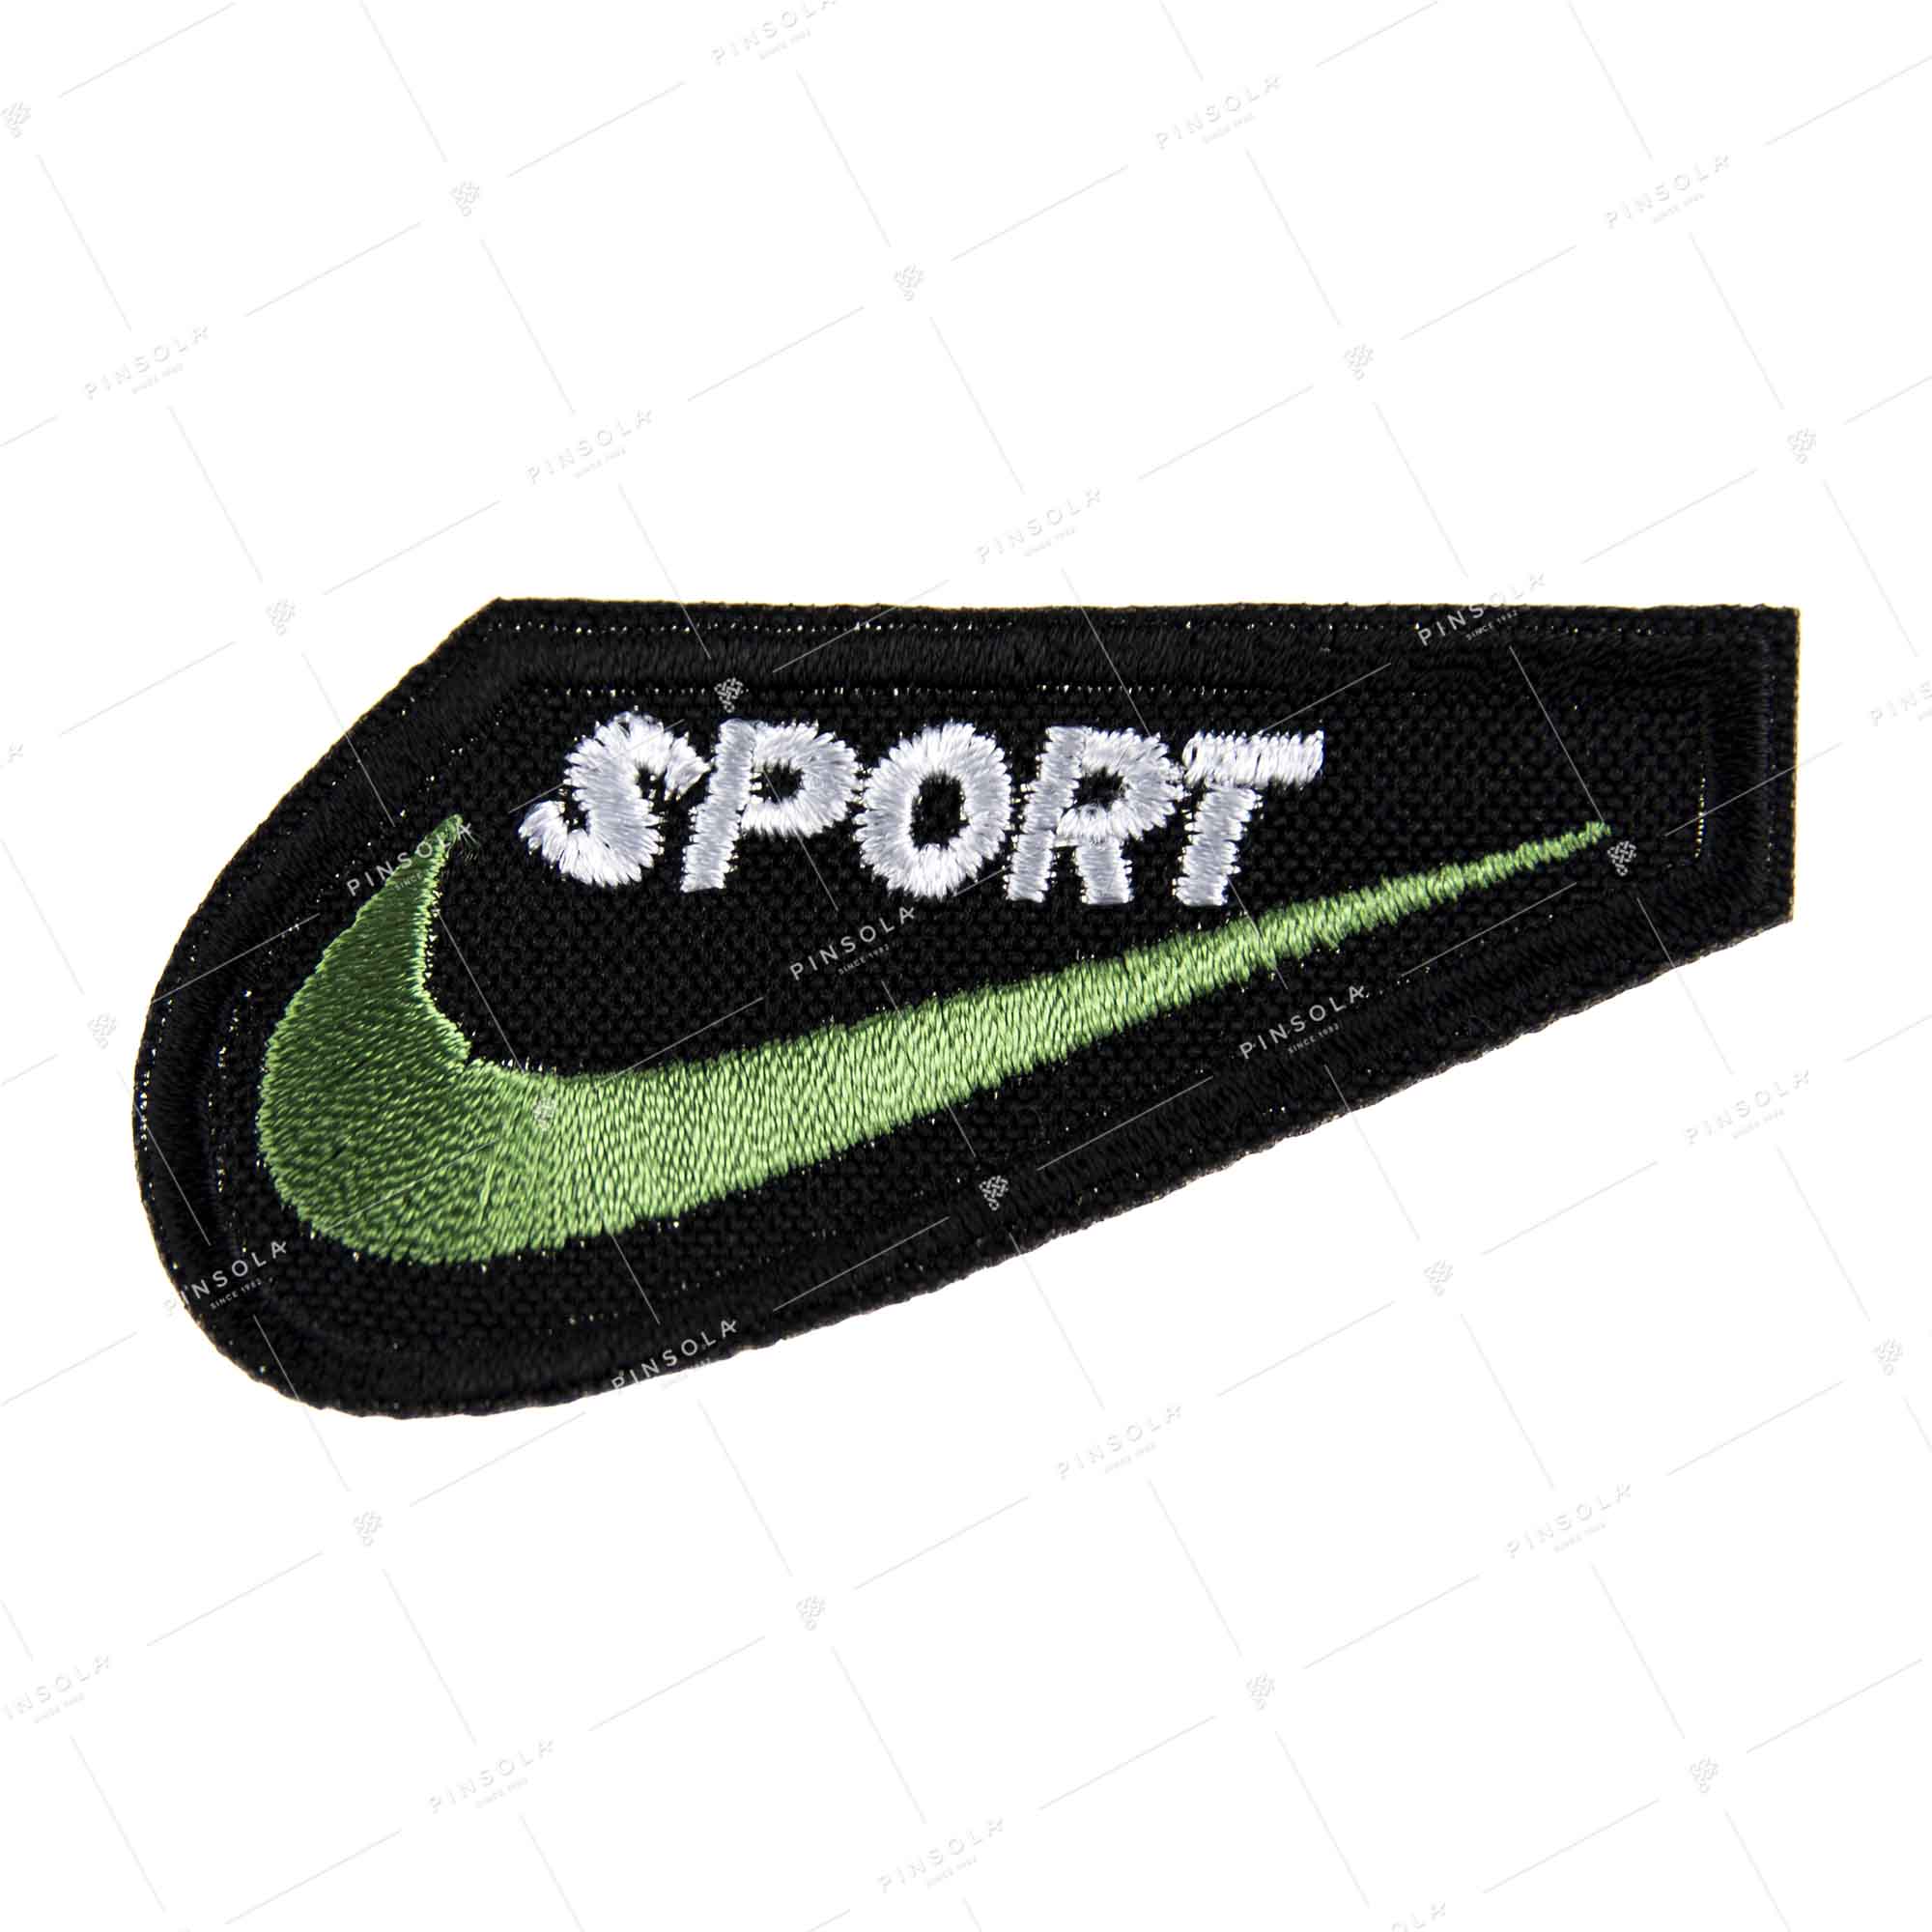 Application, patch - nike sport (355) 